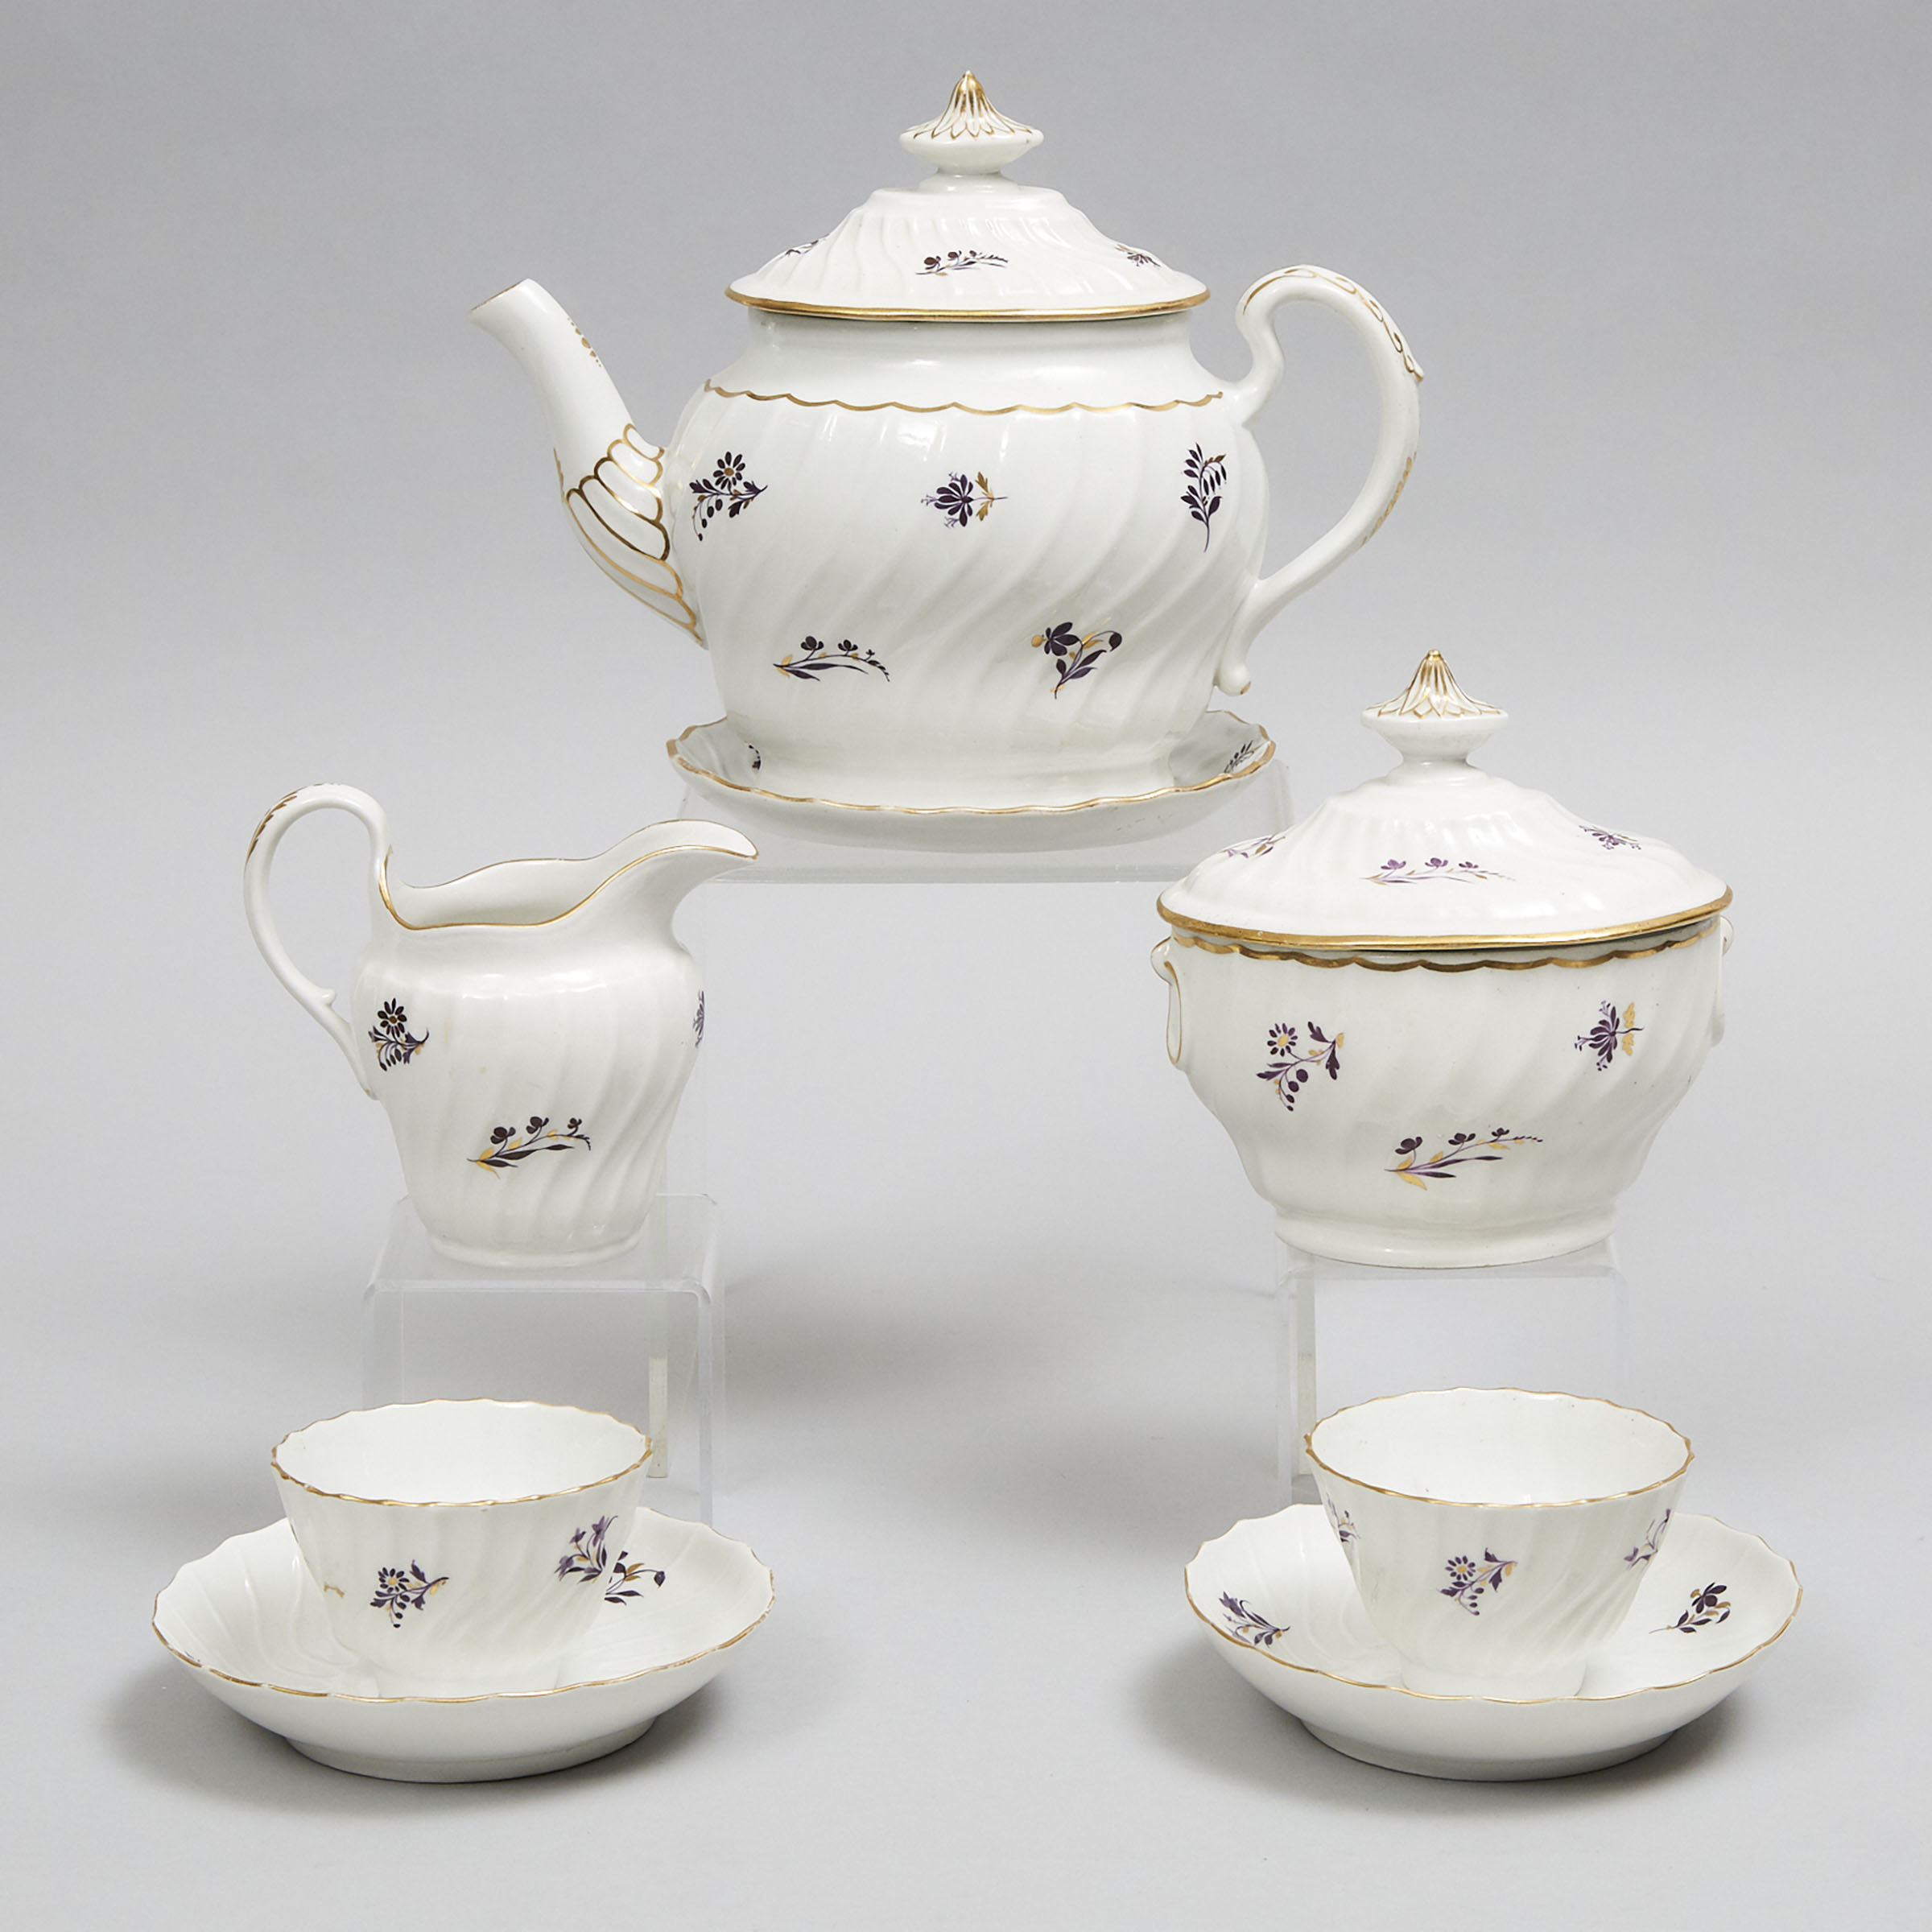 Barr Worcester Fluted Tea Service, c.1800